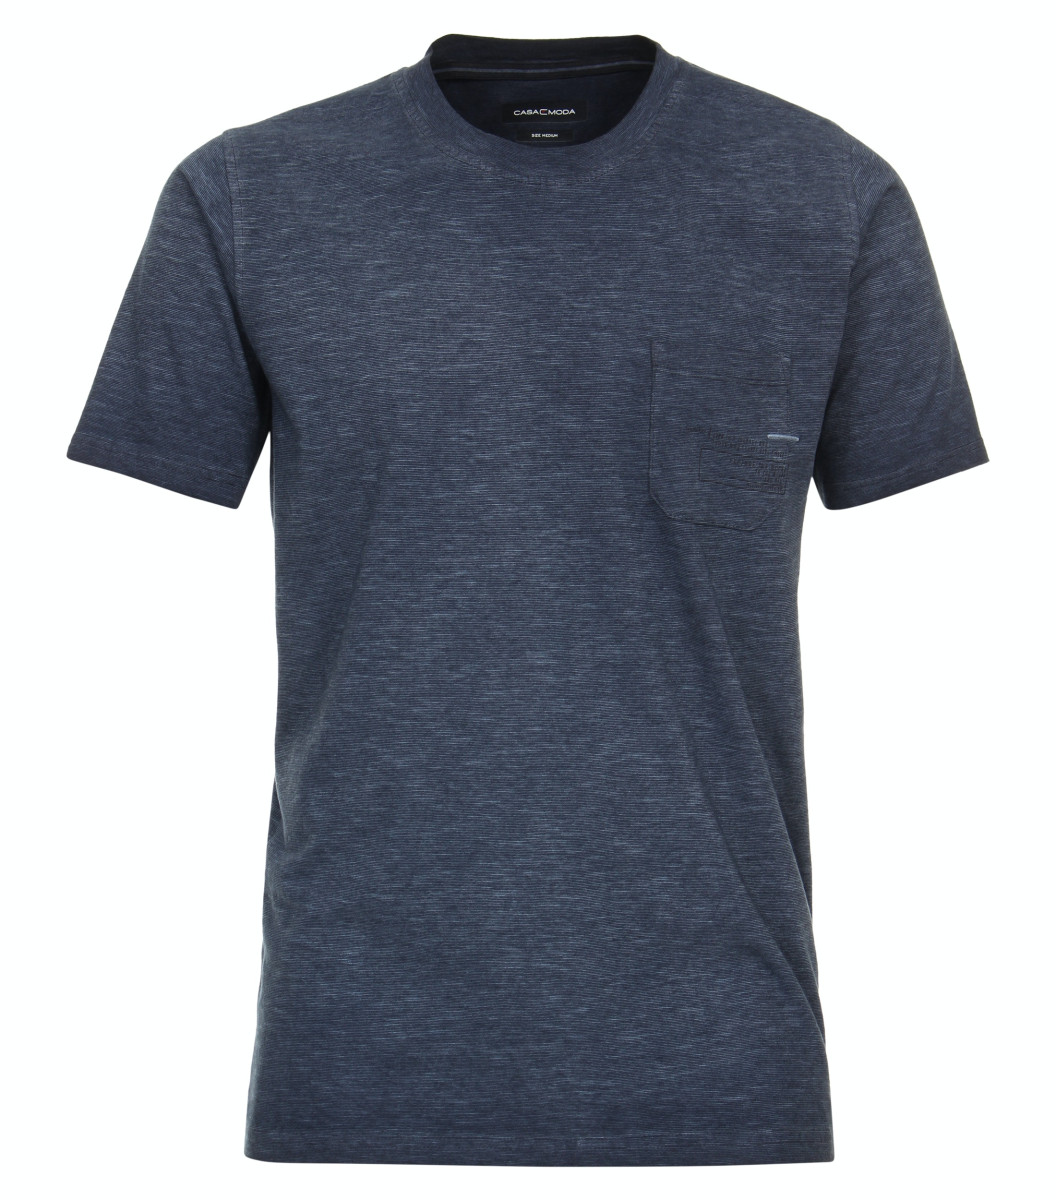 T-Shirt dunkelblau